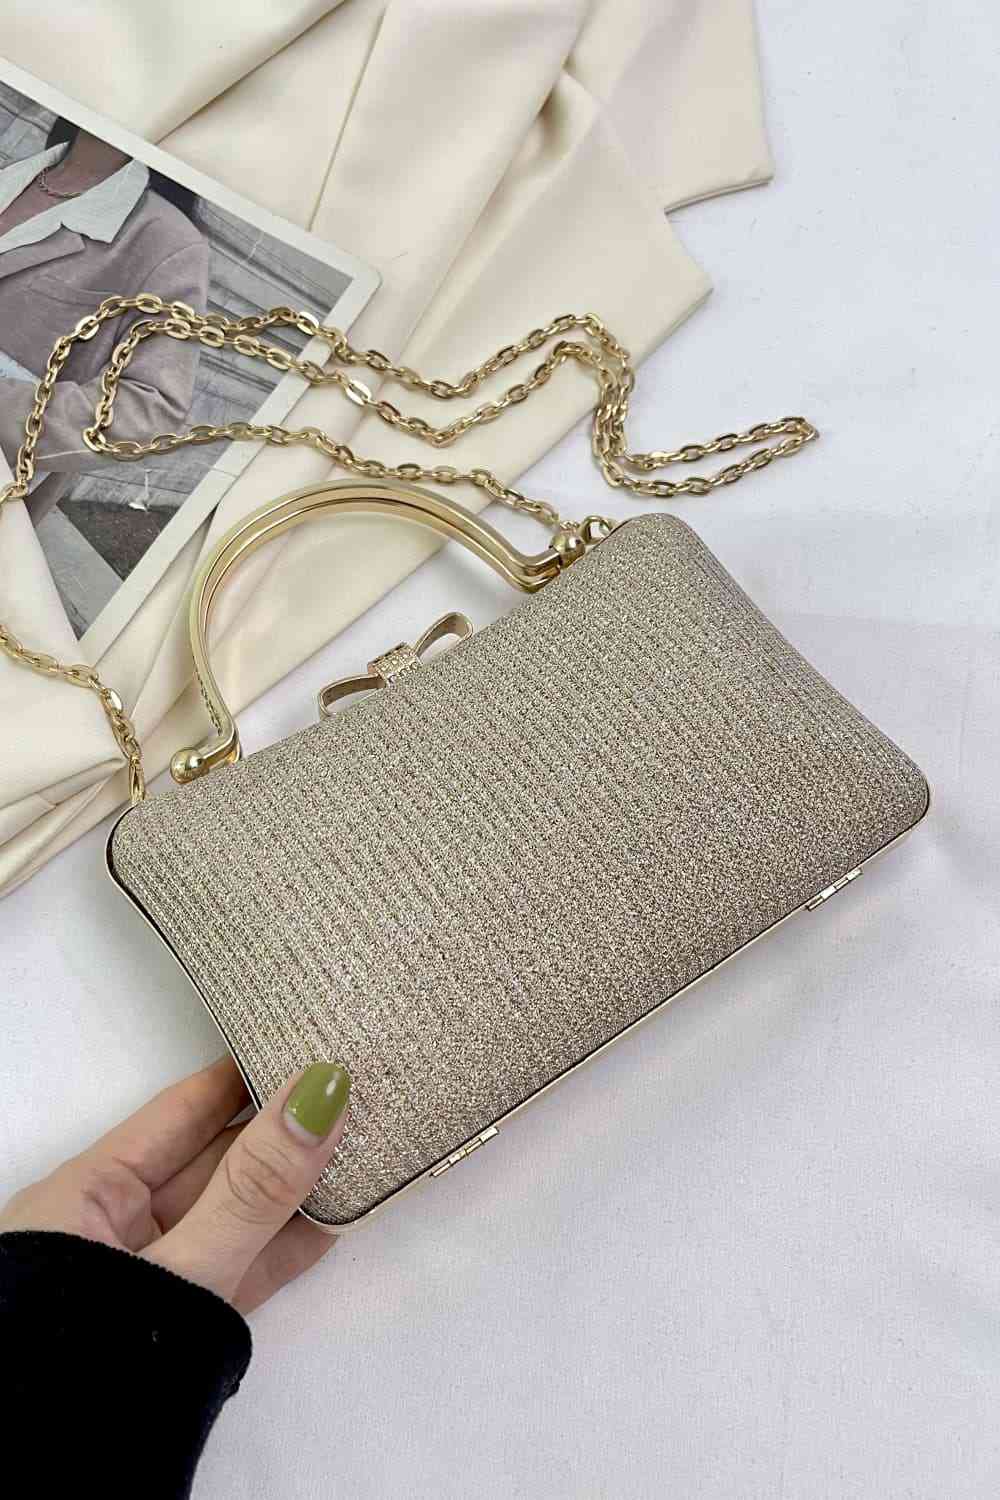 TEEK - The Accurate Acrylic Convertible Handbag BAG TEEK Trend   